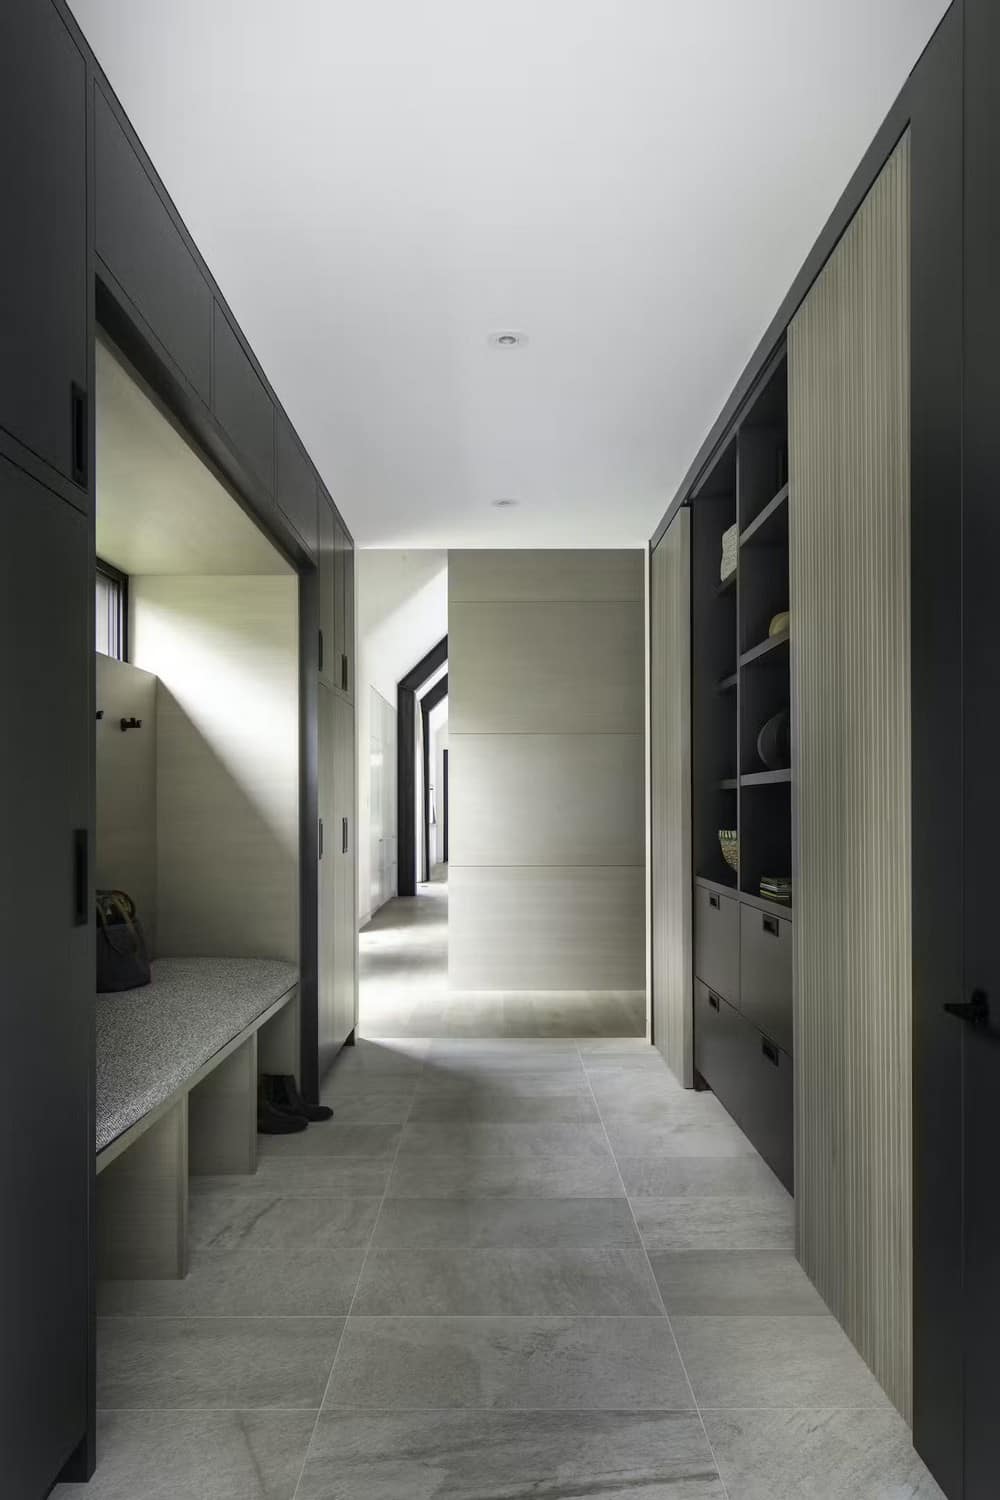 Linden Grove Residence / Studio B Architecture + Interiors